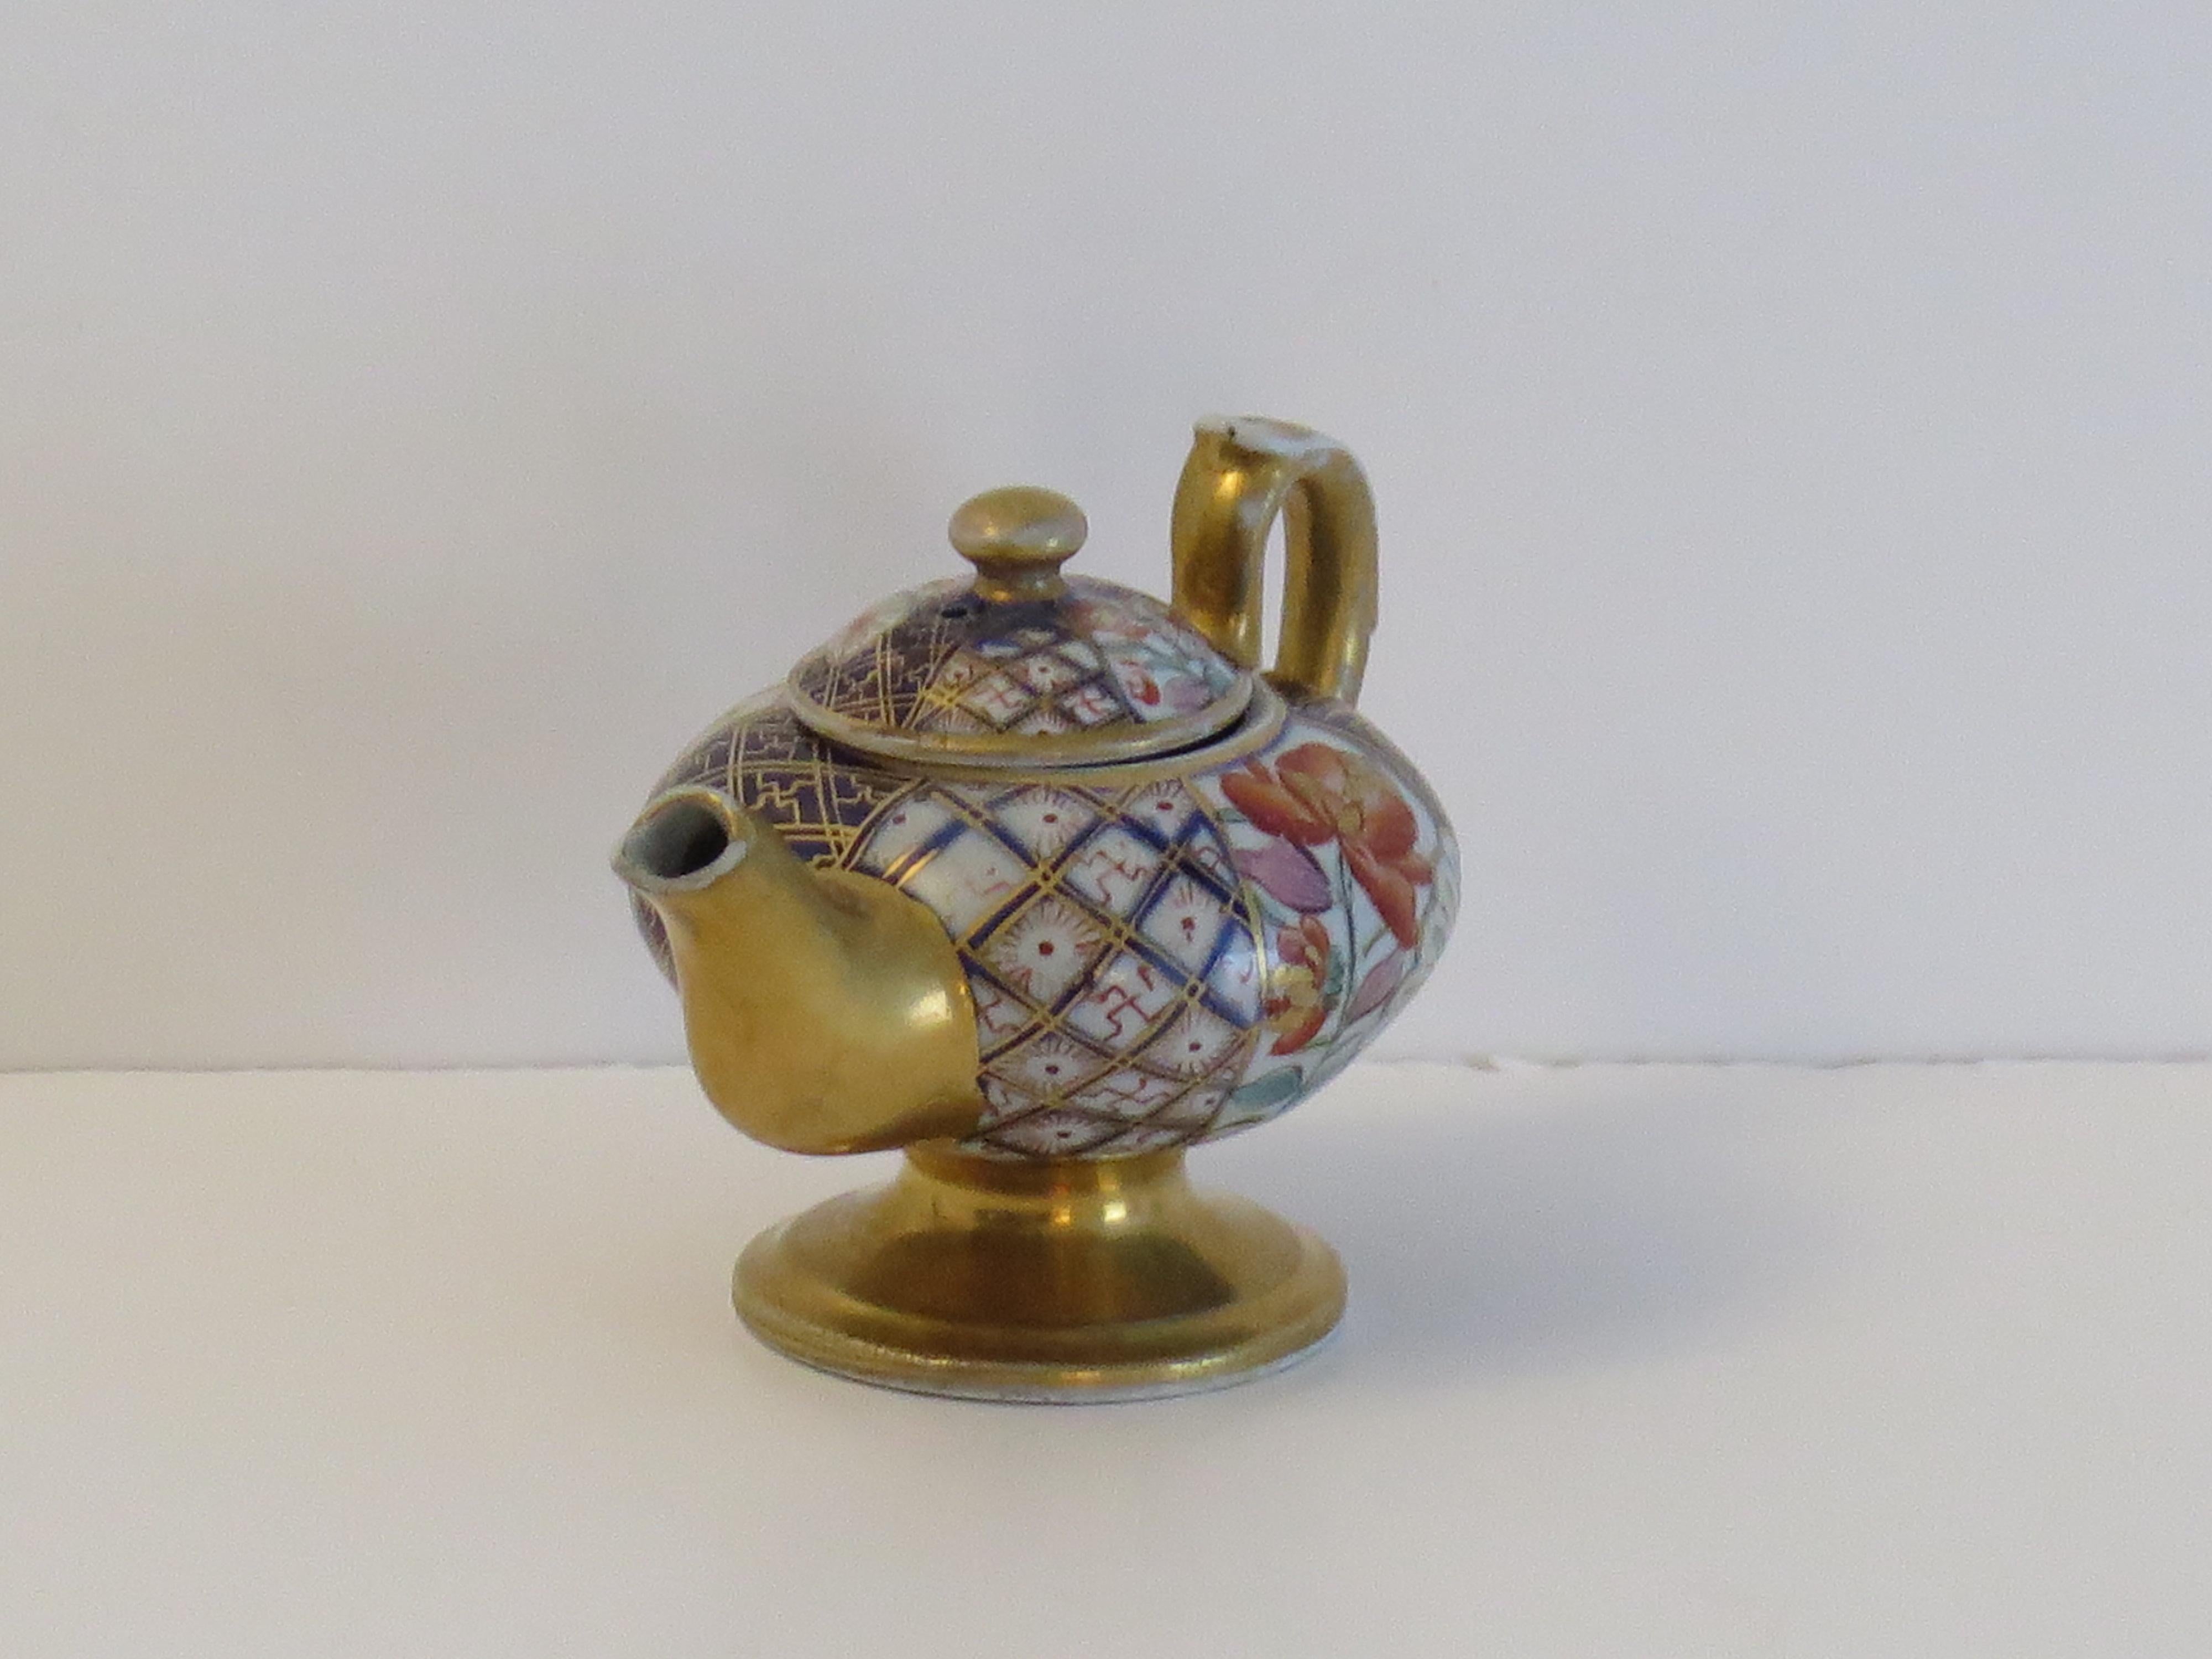 Rare Mason's Ironstone Miniature Teapot in Plaid Japan rare Pattern, circa 1820 For Sale 6